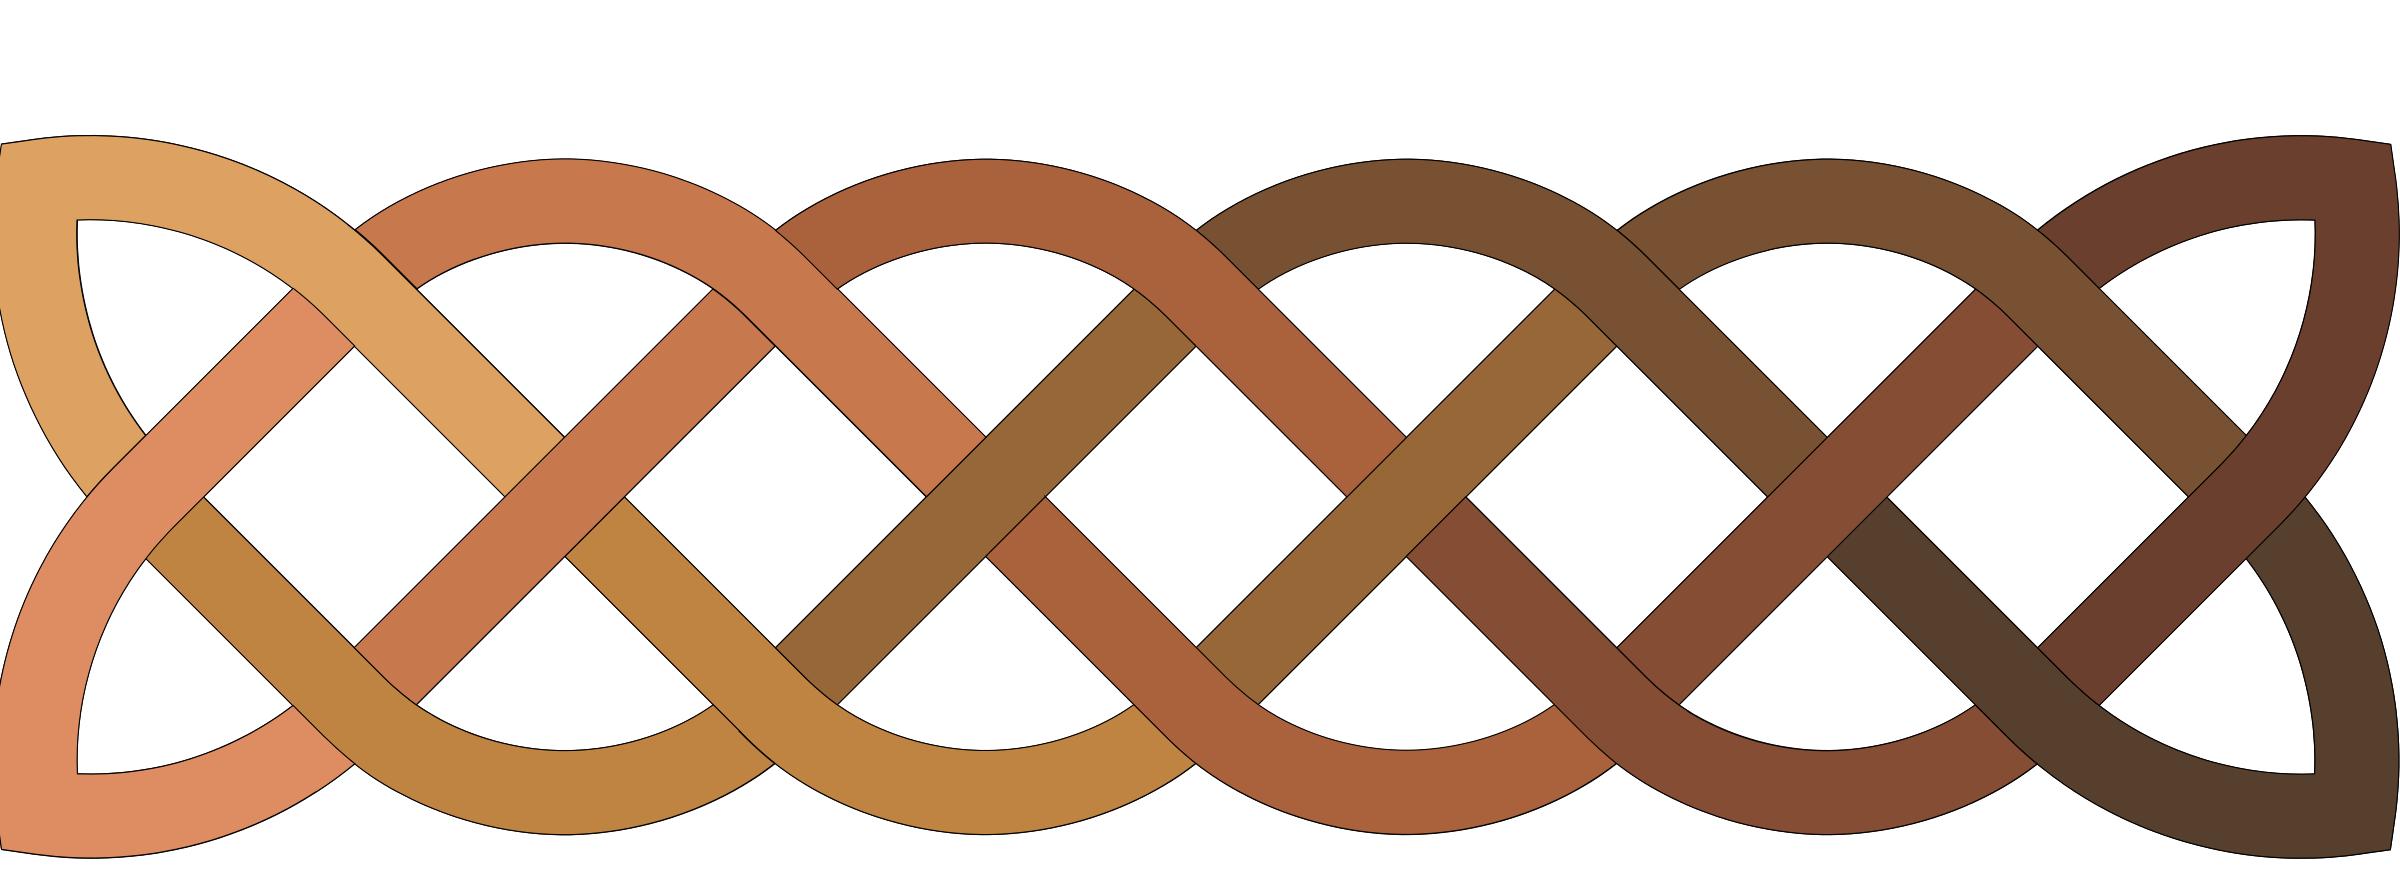 Celtic knot 2D design png